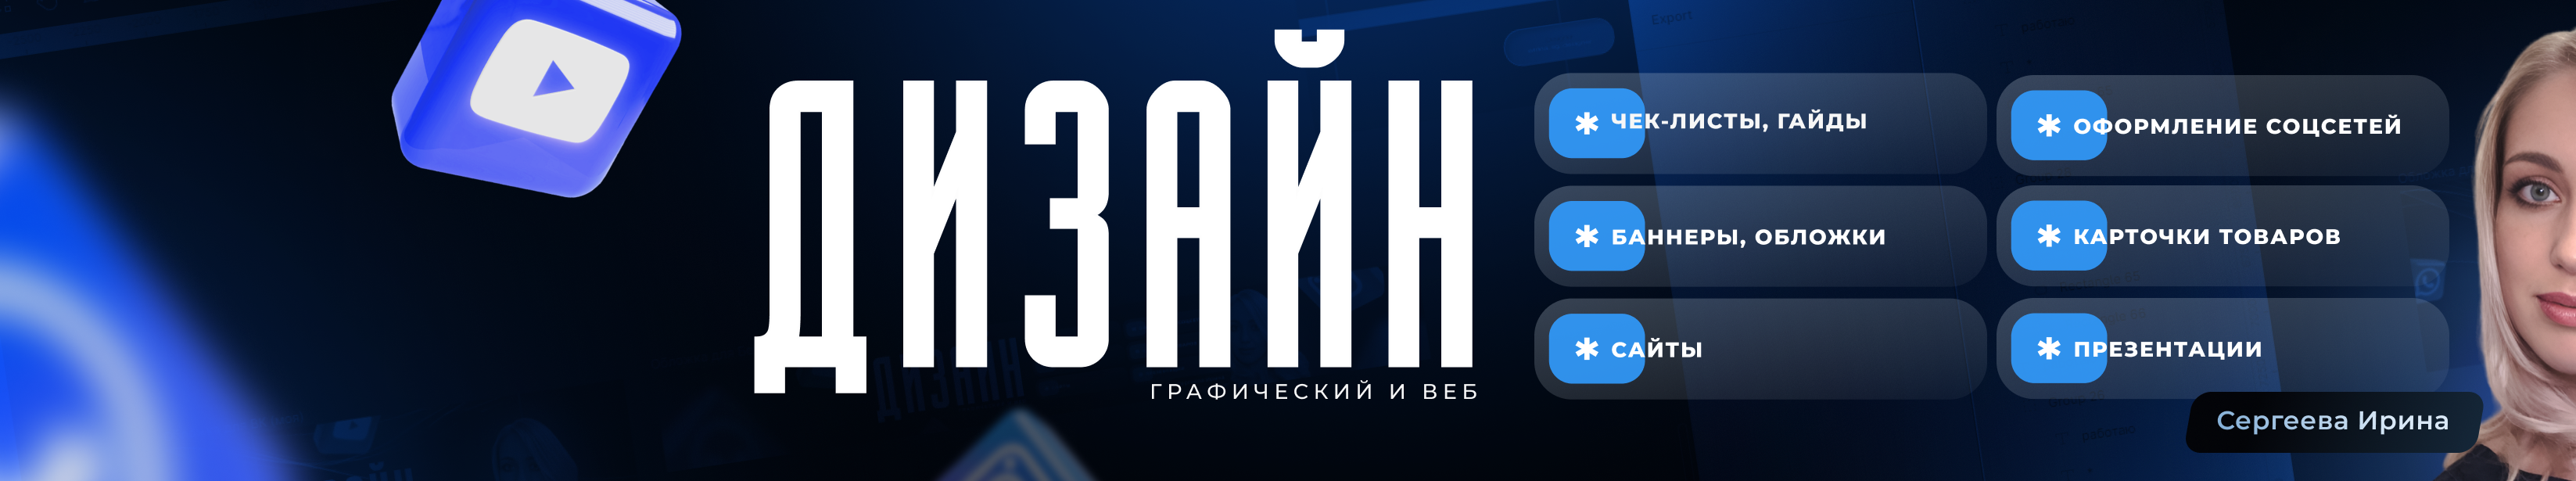 Ирина Сергеева's profile banner